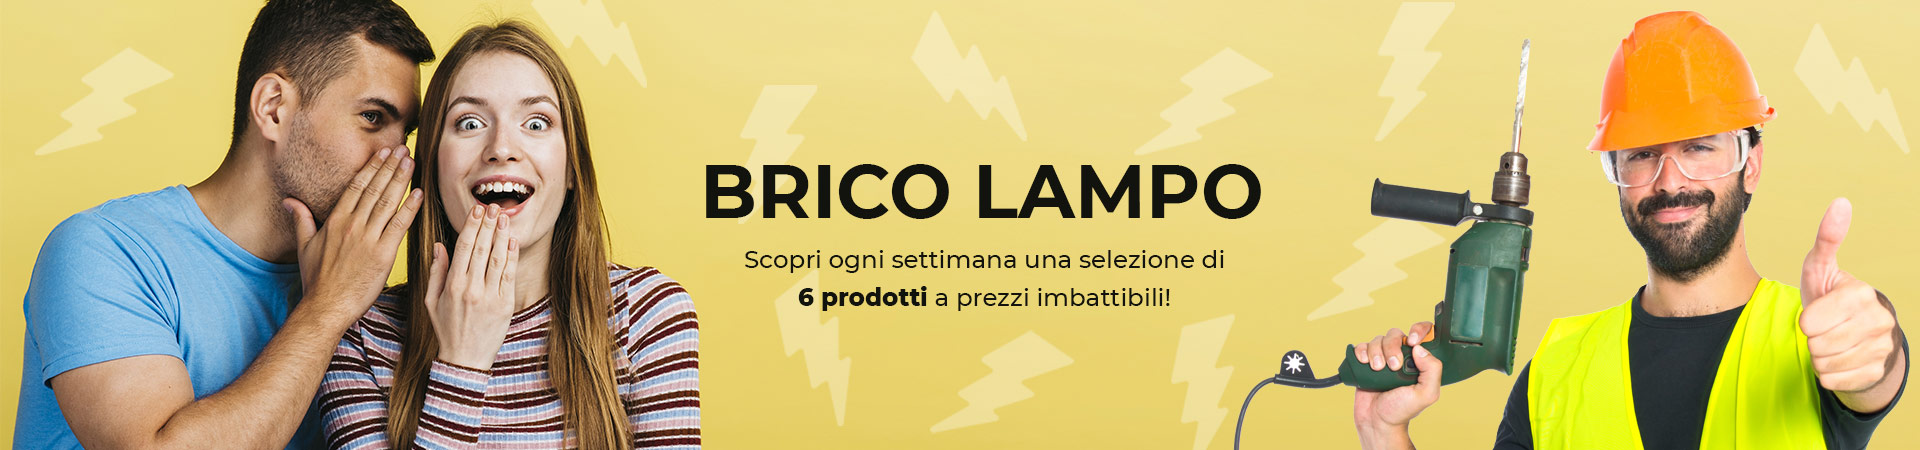 brico-lampo-header